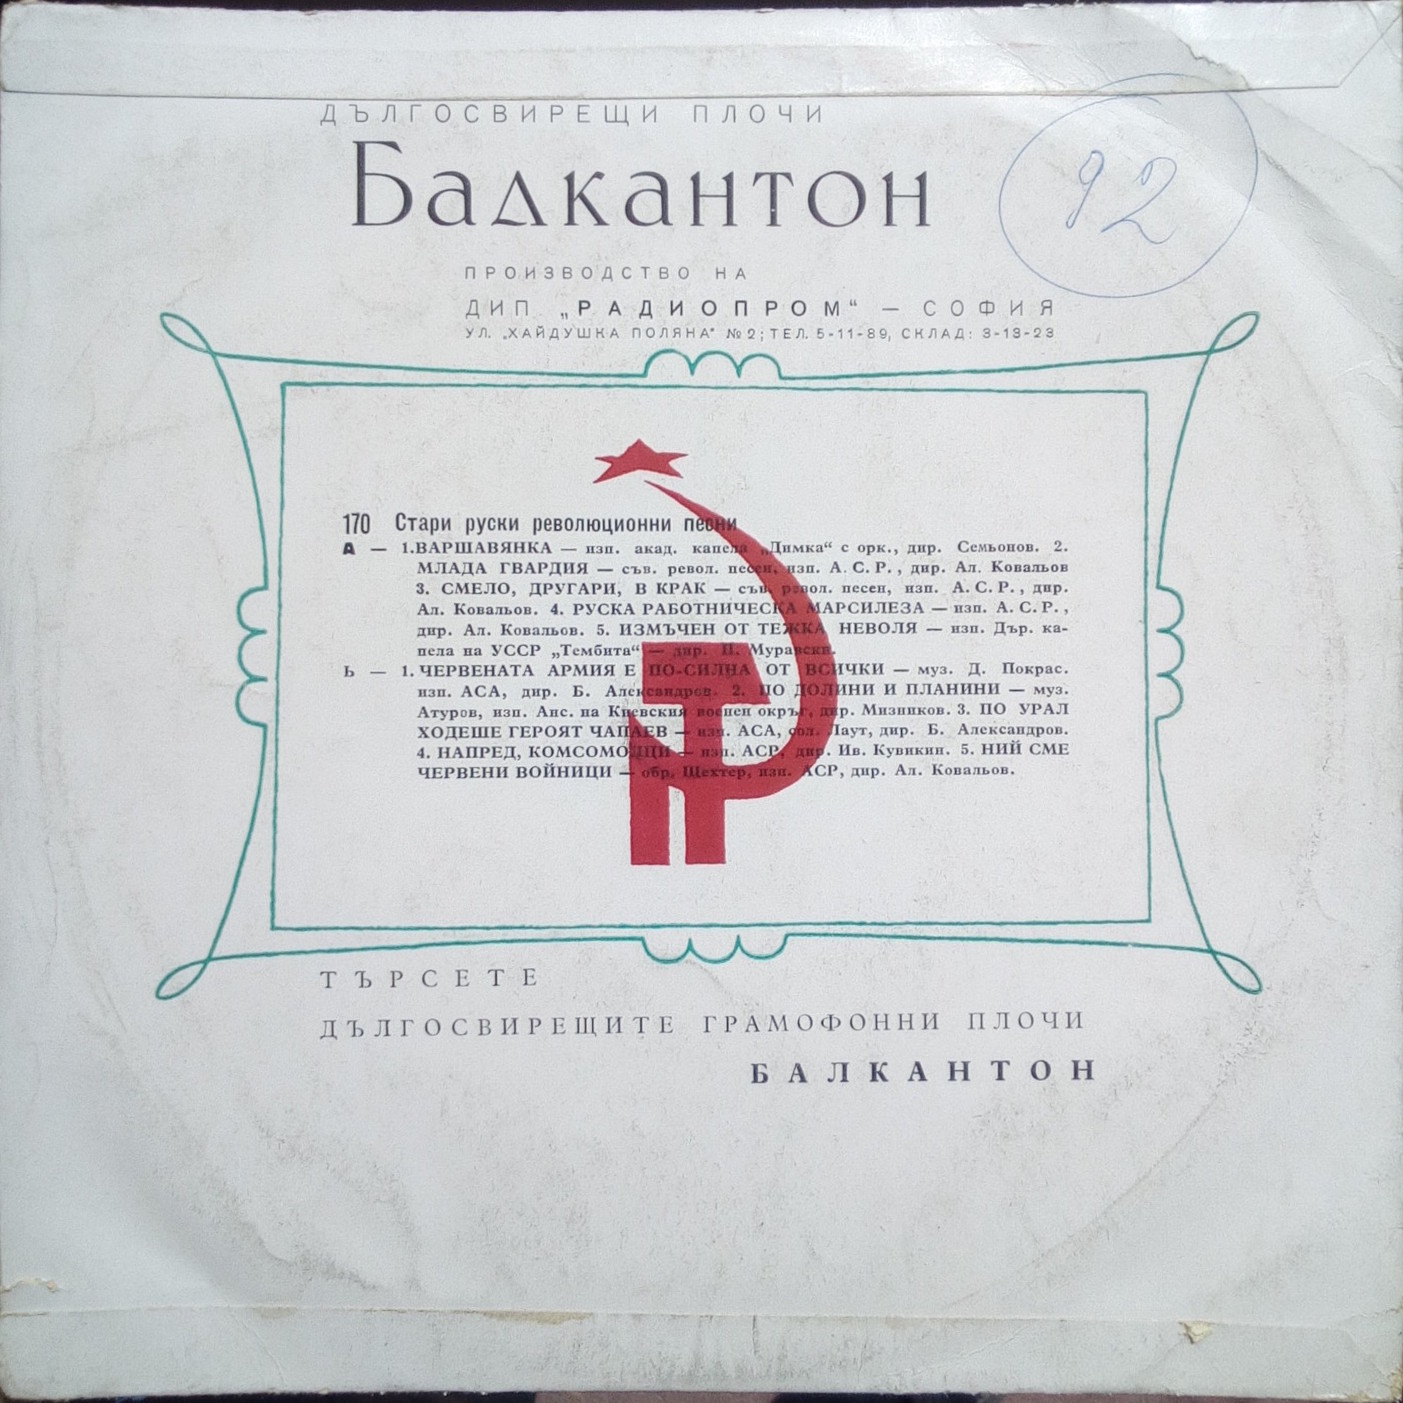 Стари руски революционни песни